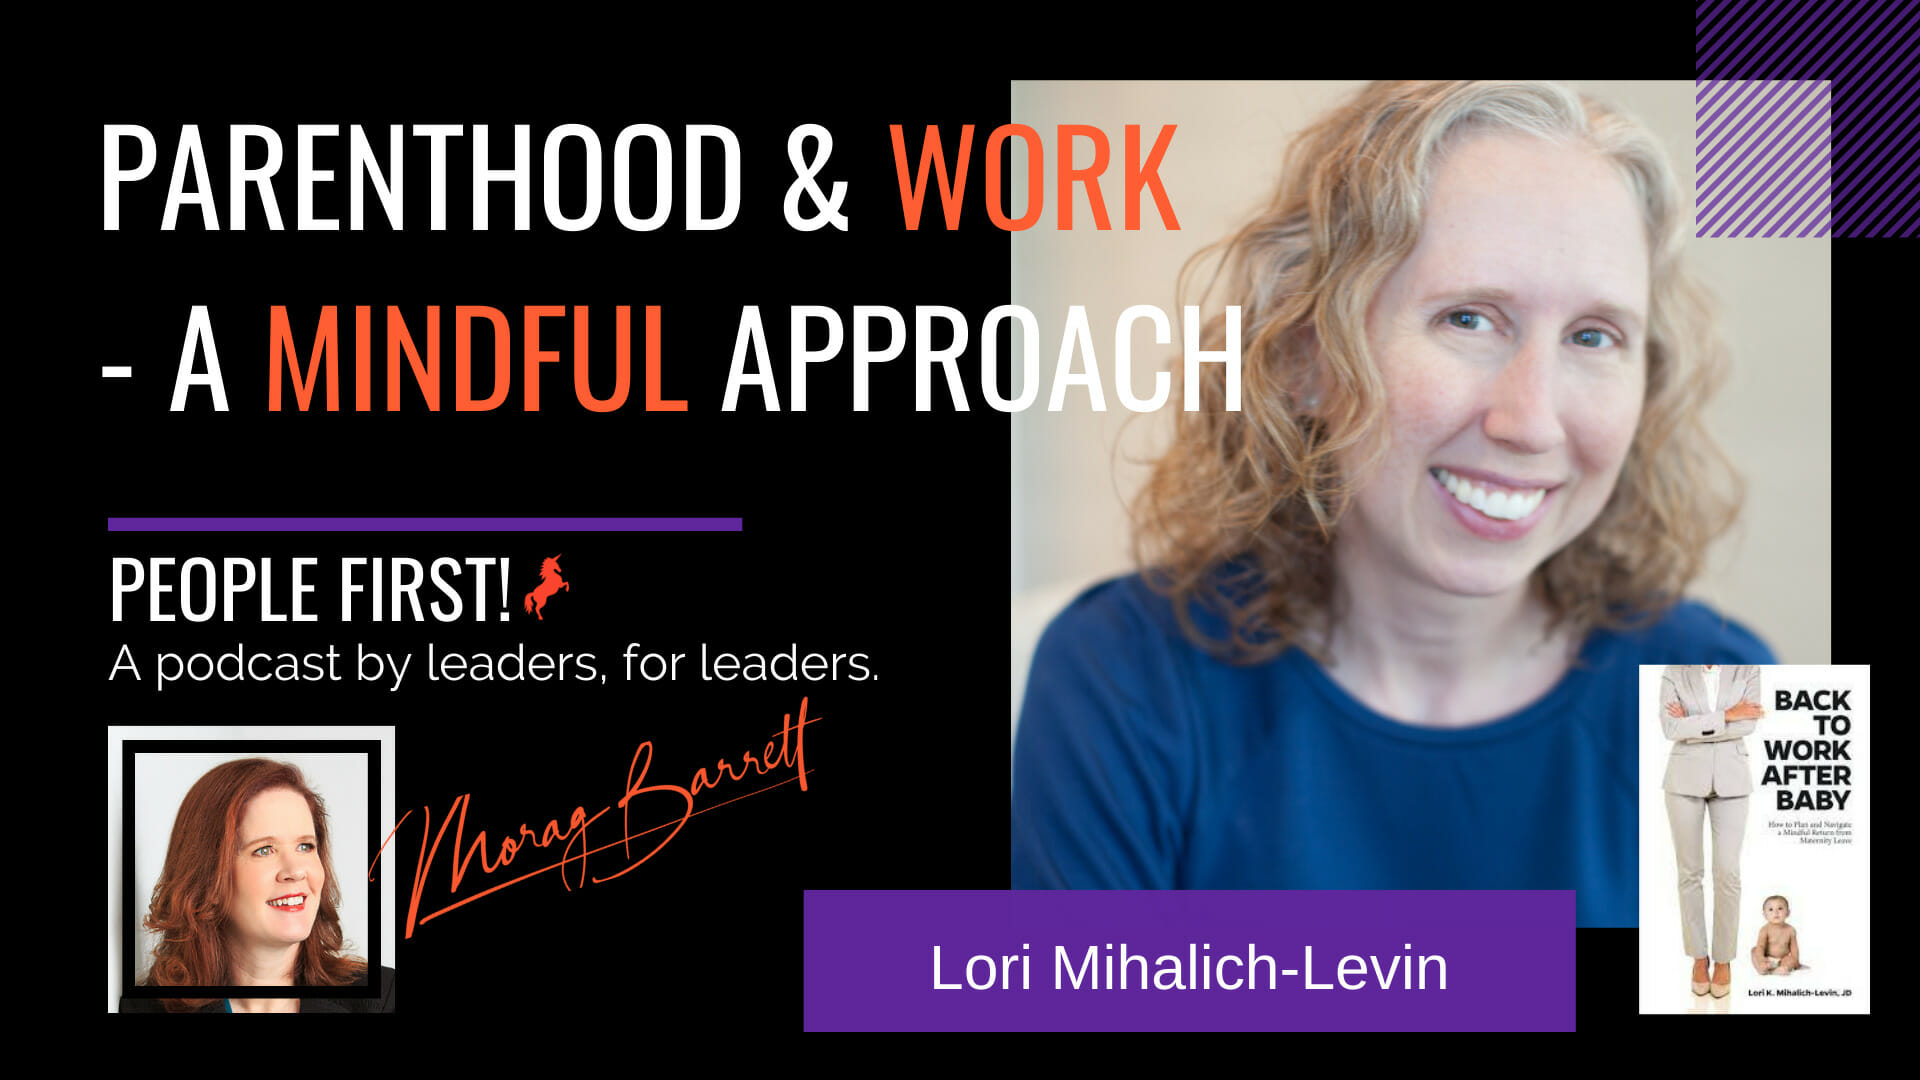 Parenthood & Work - A Minddful Approach Morag Barrett and Lori Mihalich-Levin